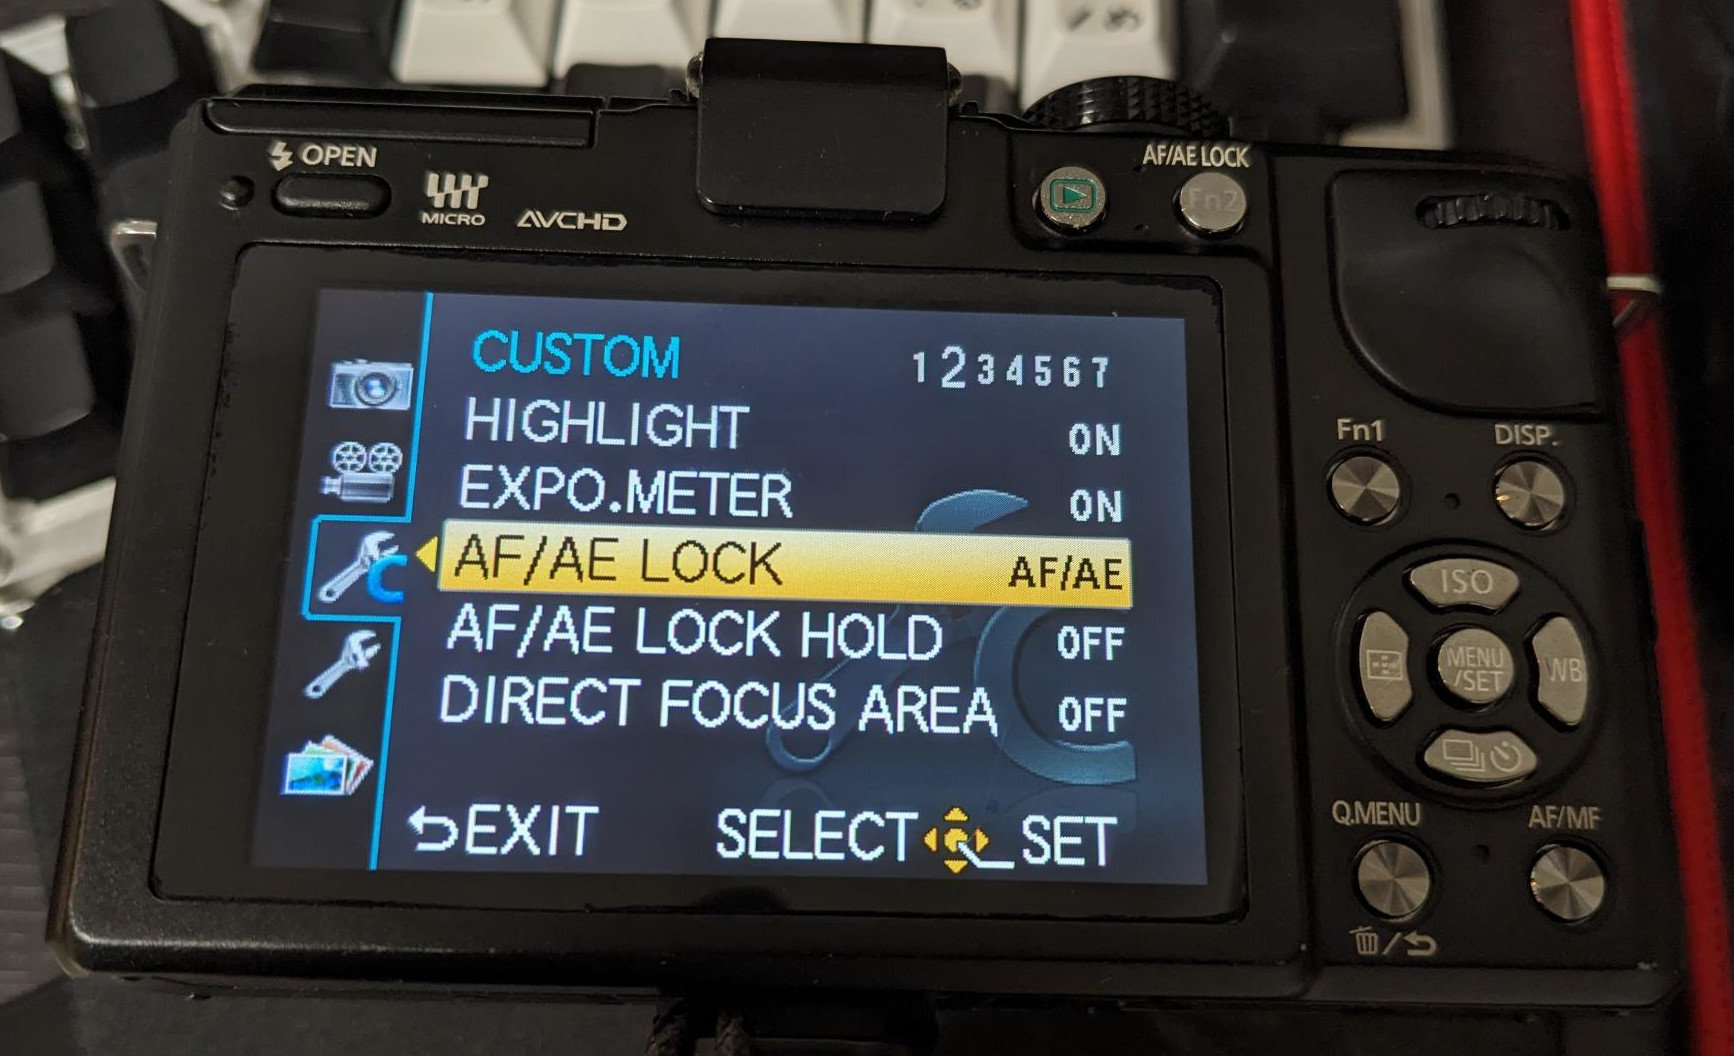 Japanese GX1 camera with English menus